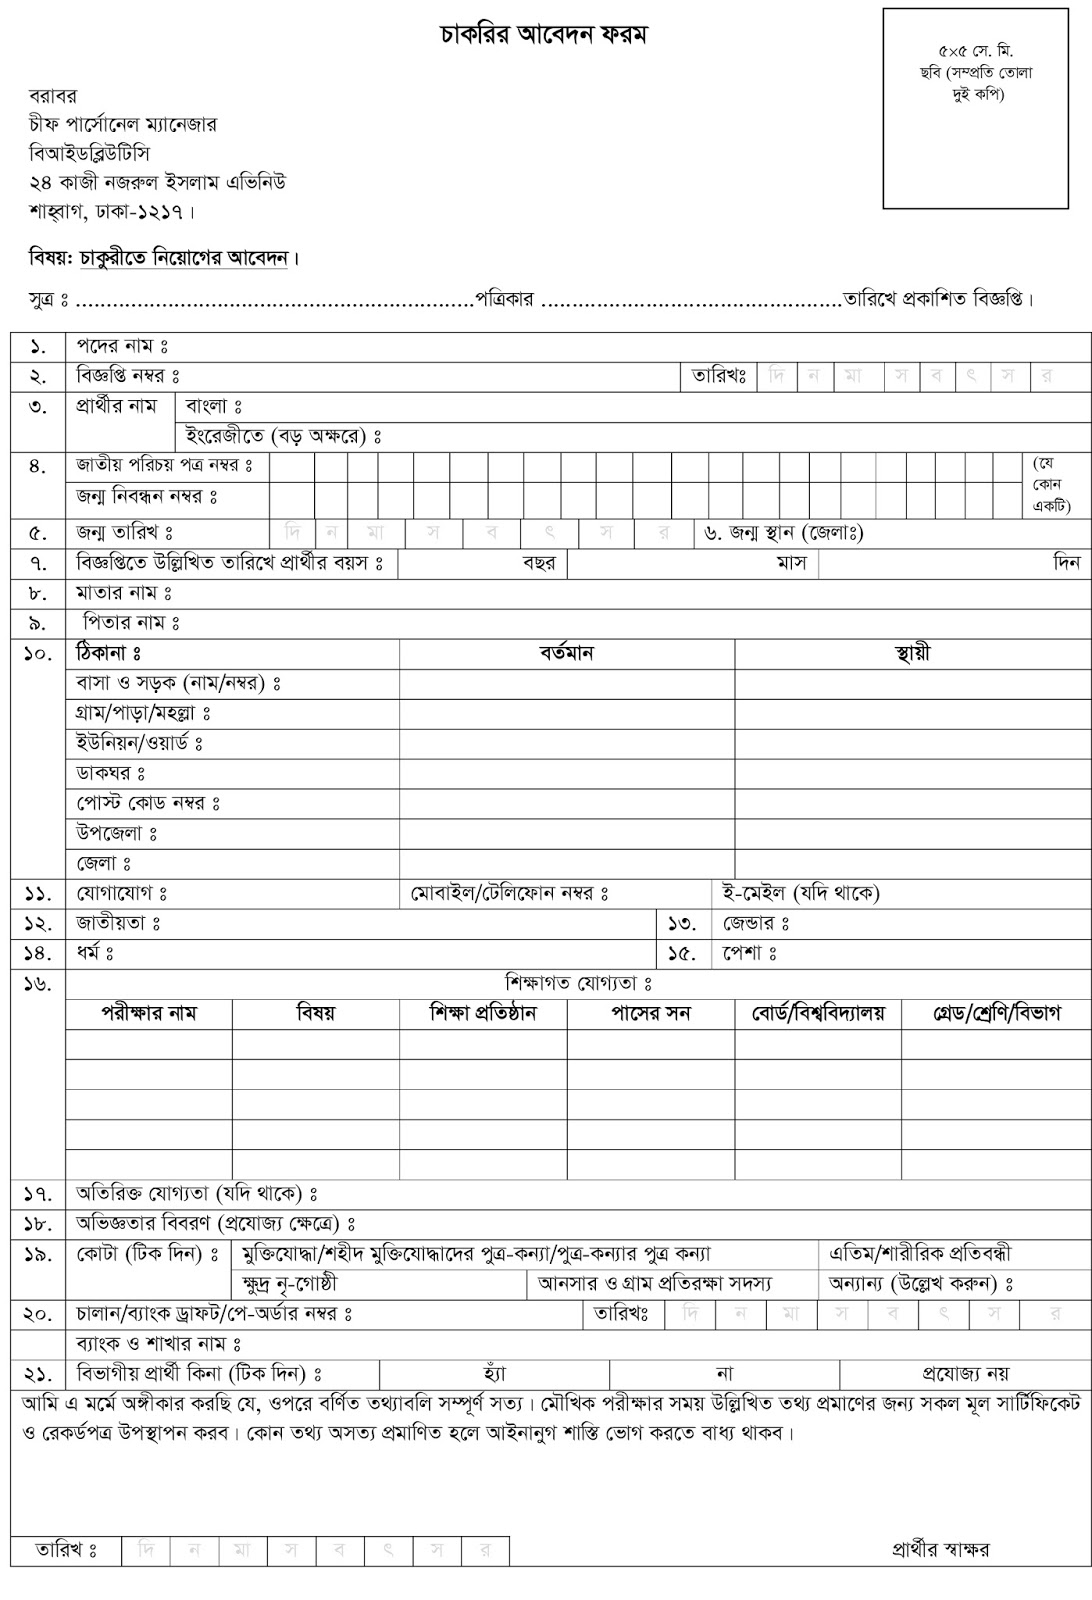 Bangladesh Inland Water Transport Corporation (BIWTC) Job Application Form